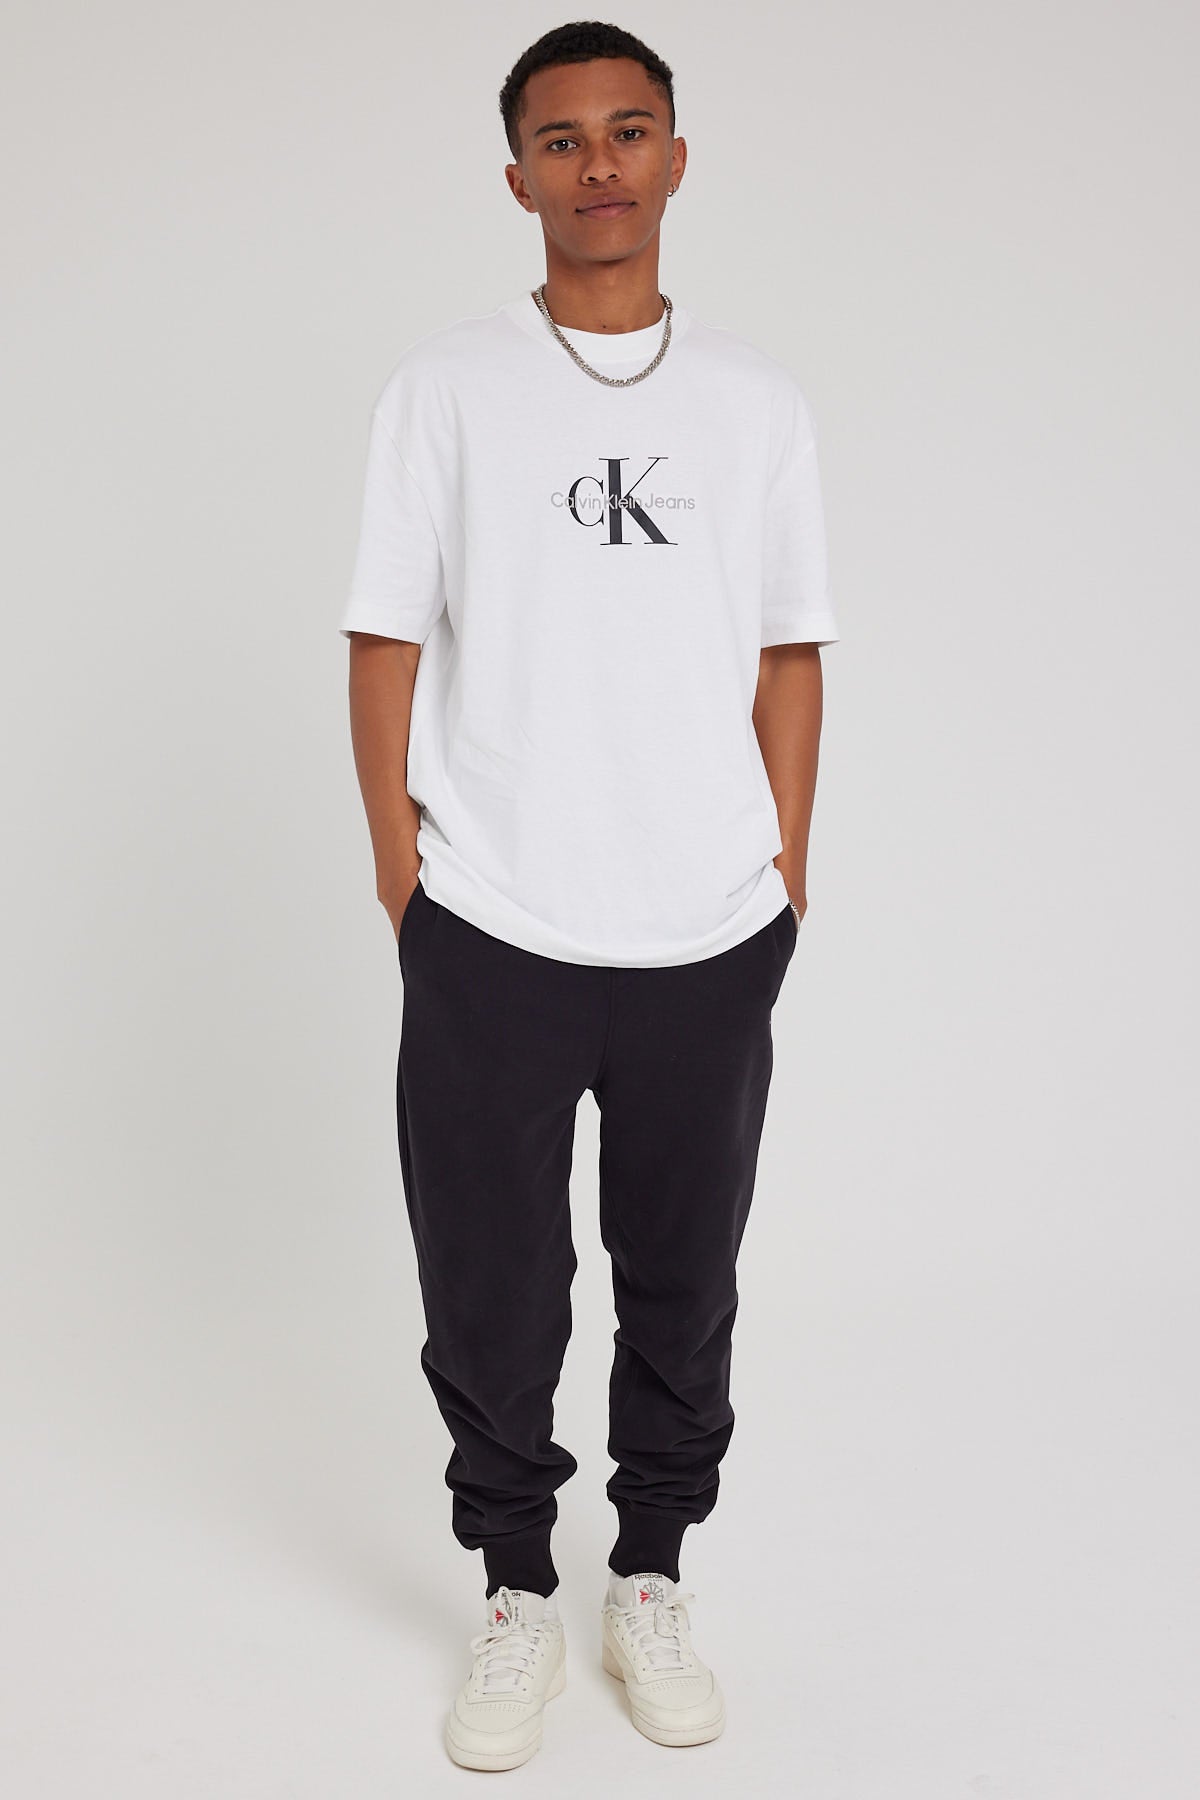 Calvin Klein  Men's Clothing & Accessories – Universal Store